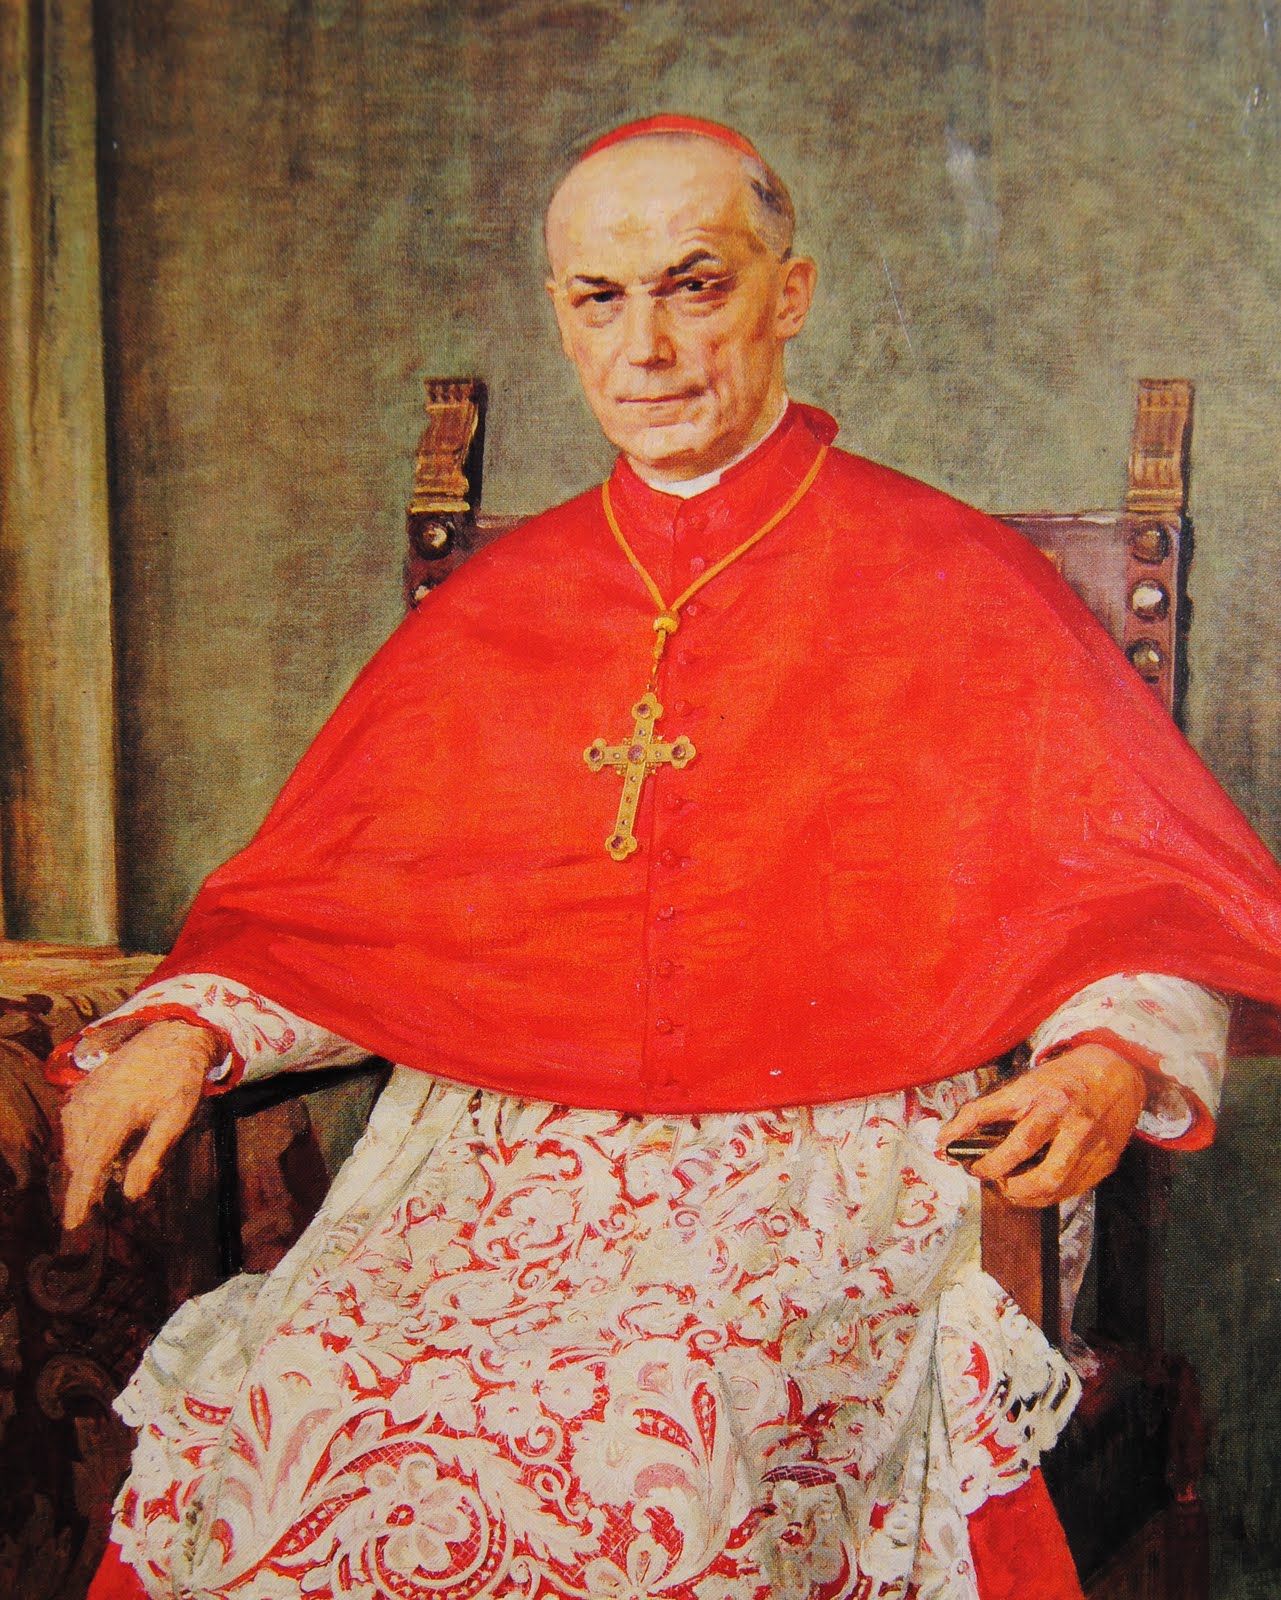 RORATE CÆLI: Archbishop KochSacrosanctum Concilium meant Mass ad orientem  and in Latin